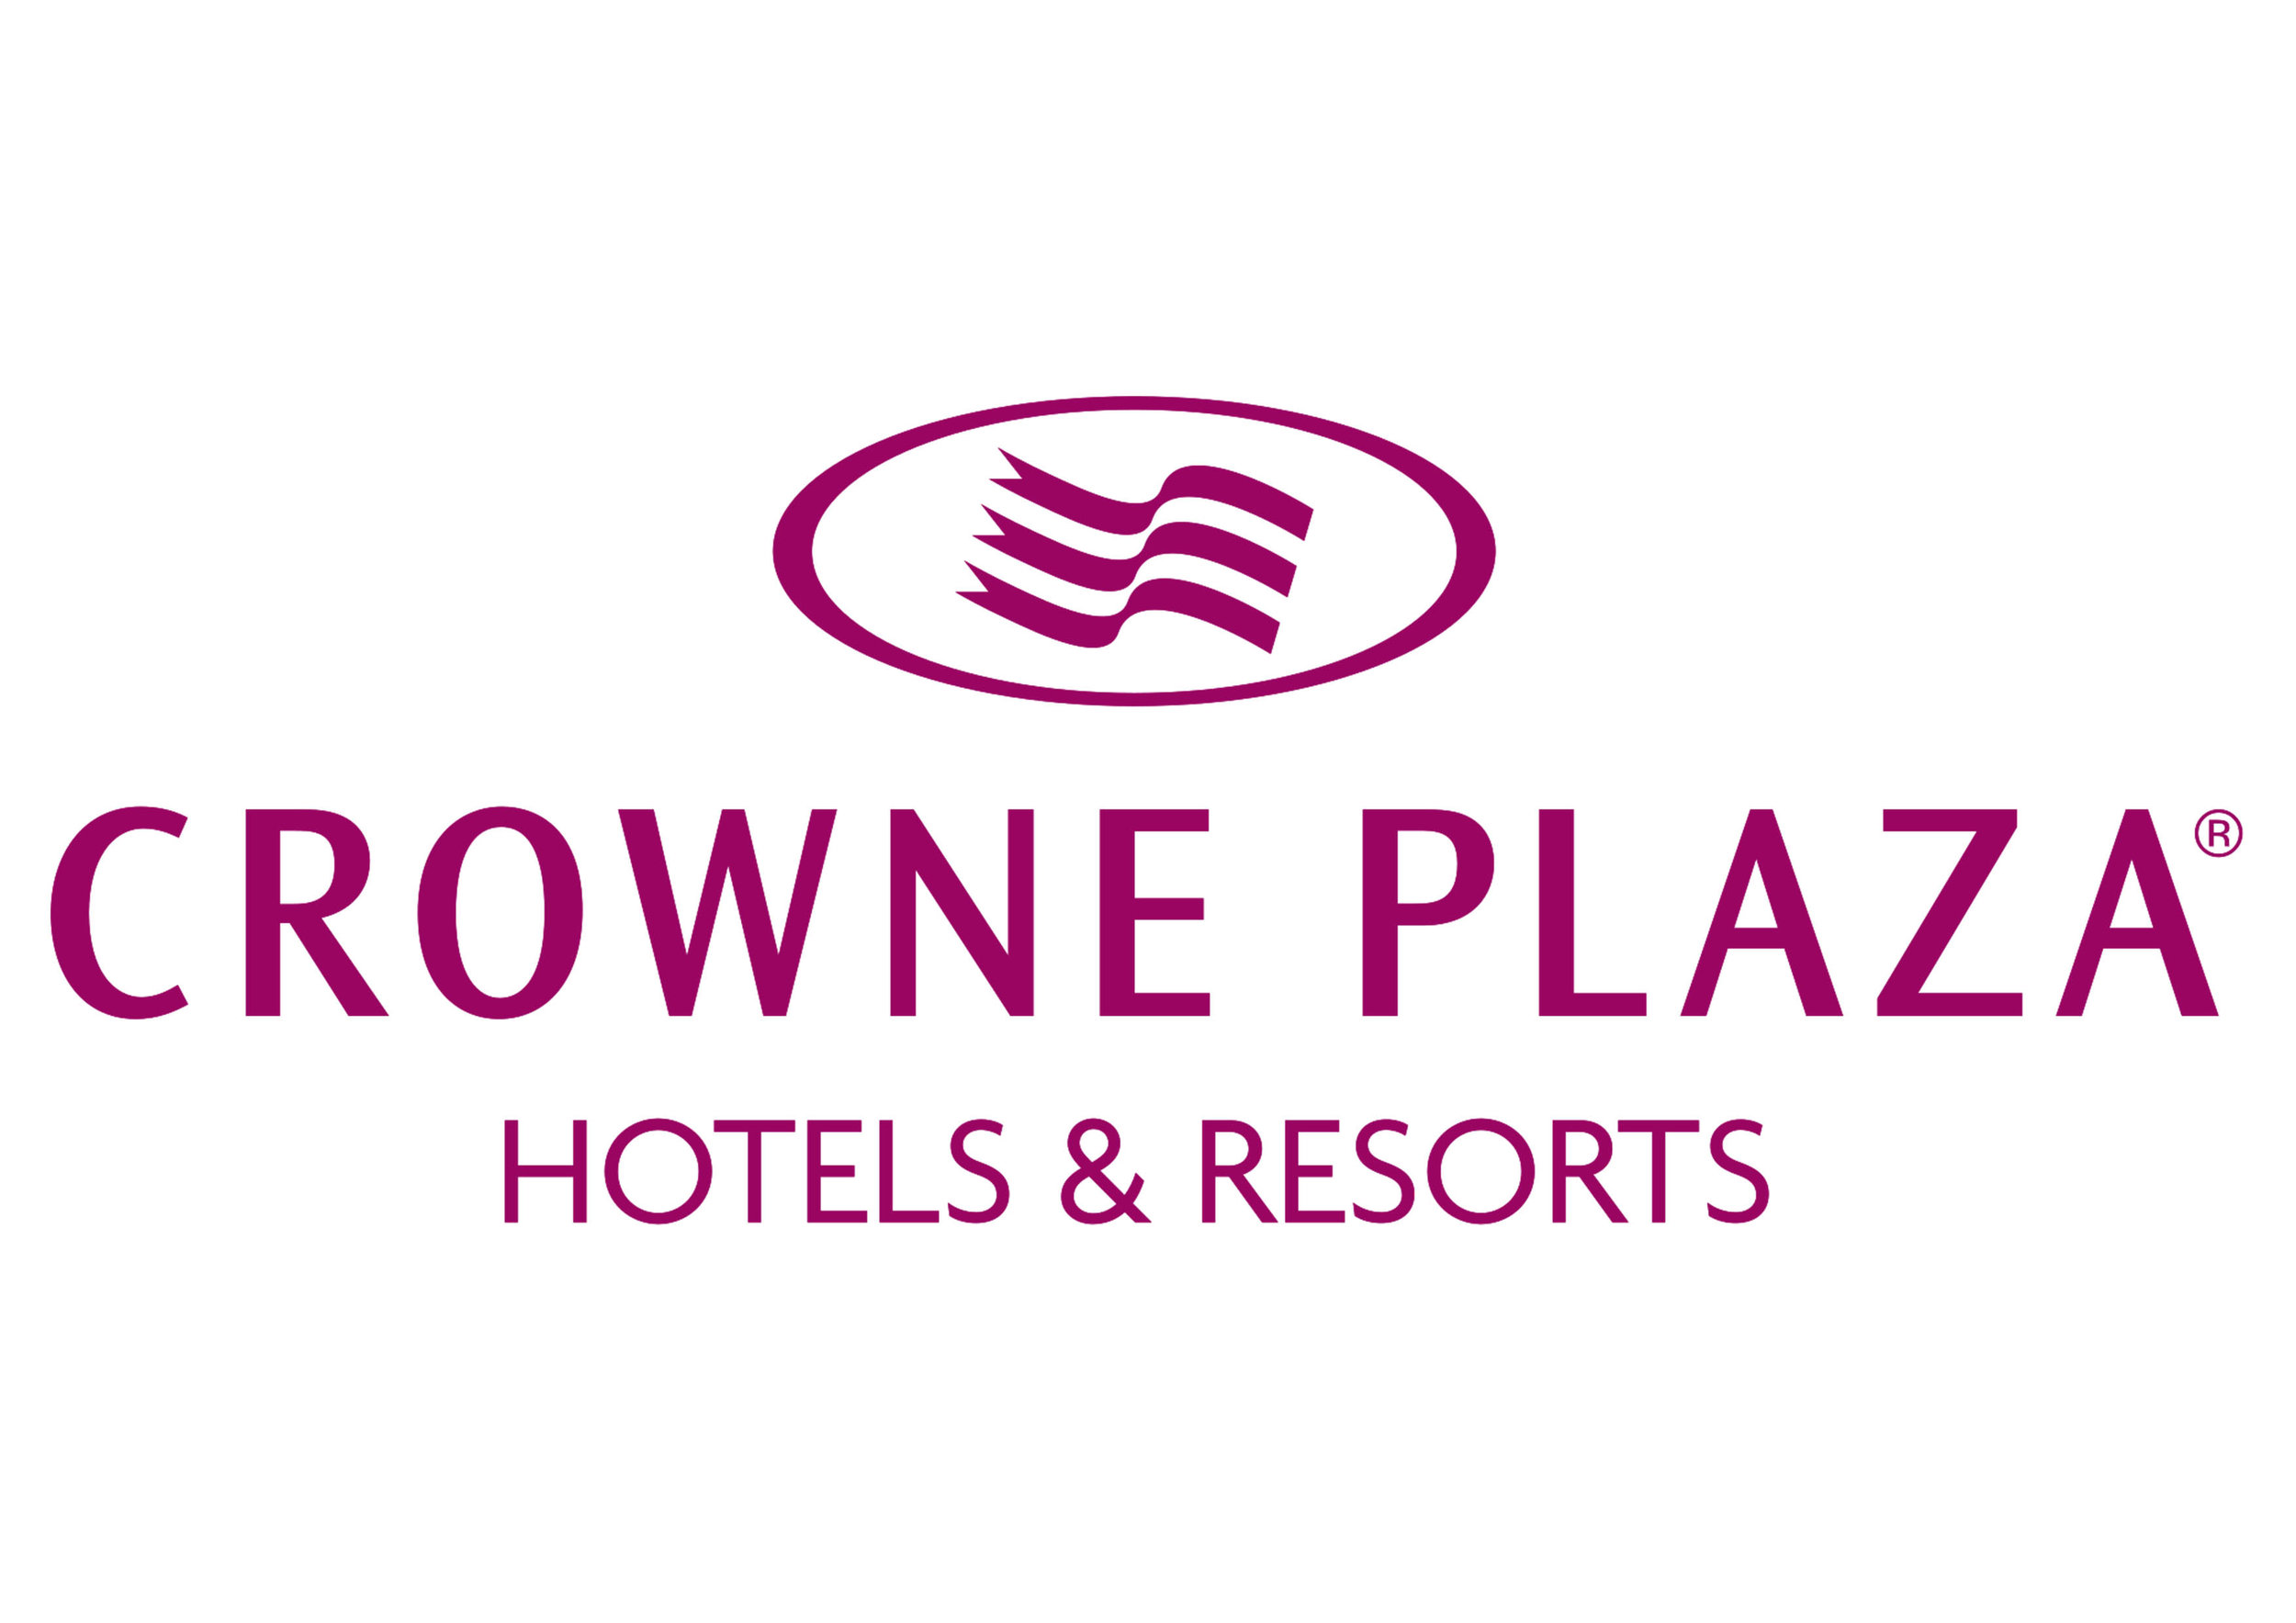  ..  Crowne Plaza Hotels 